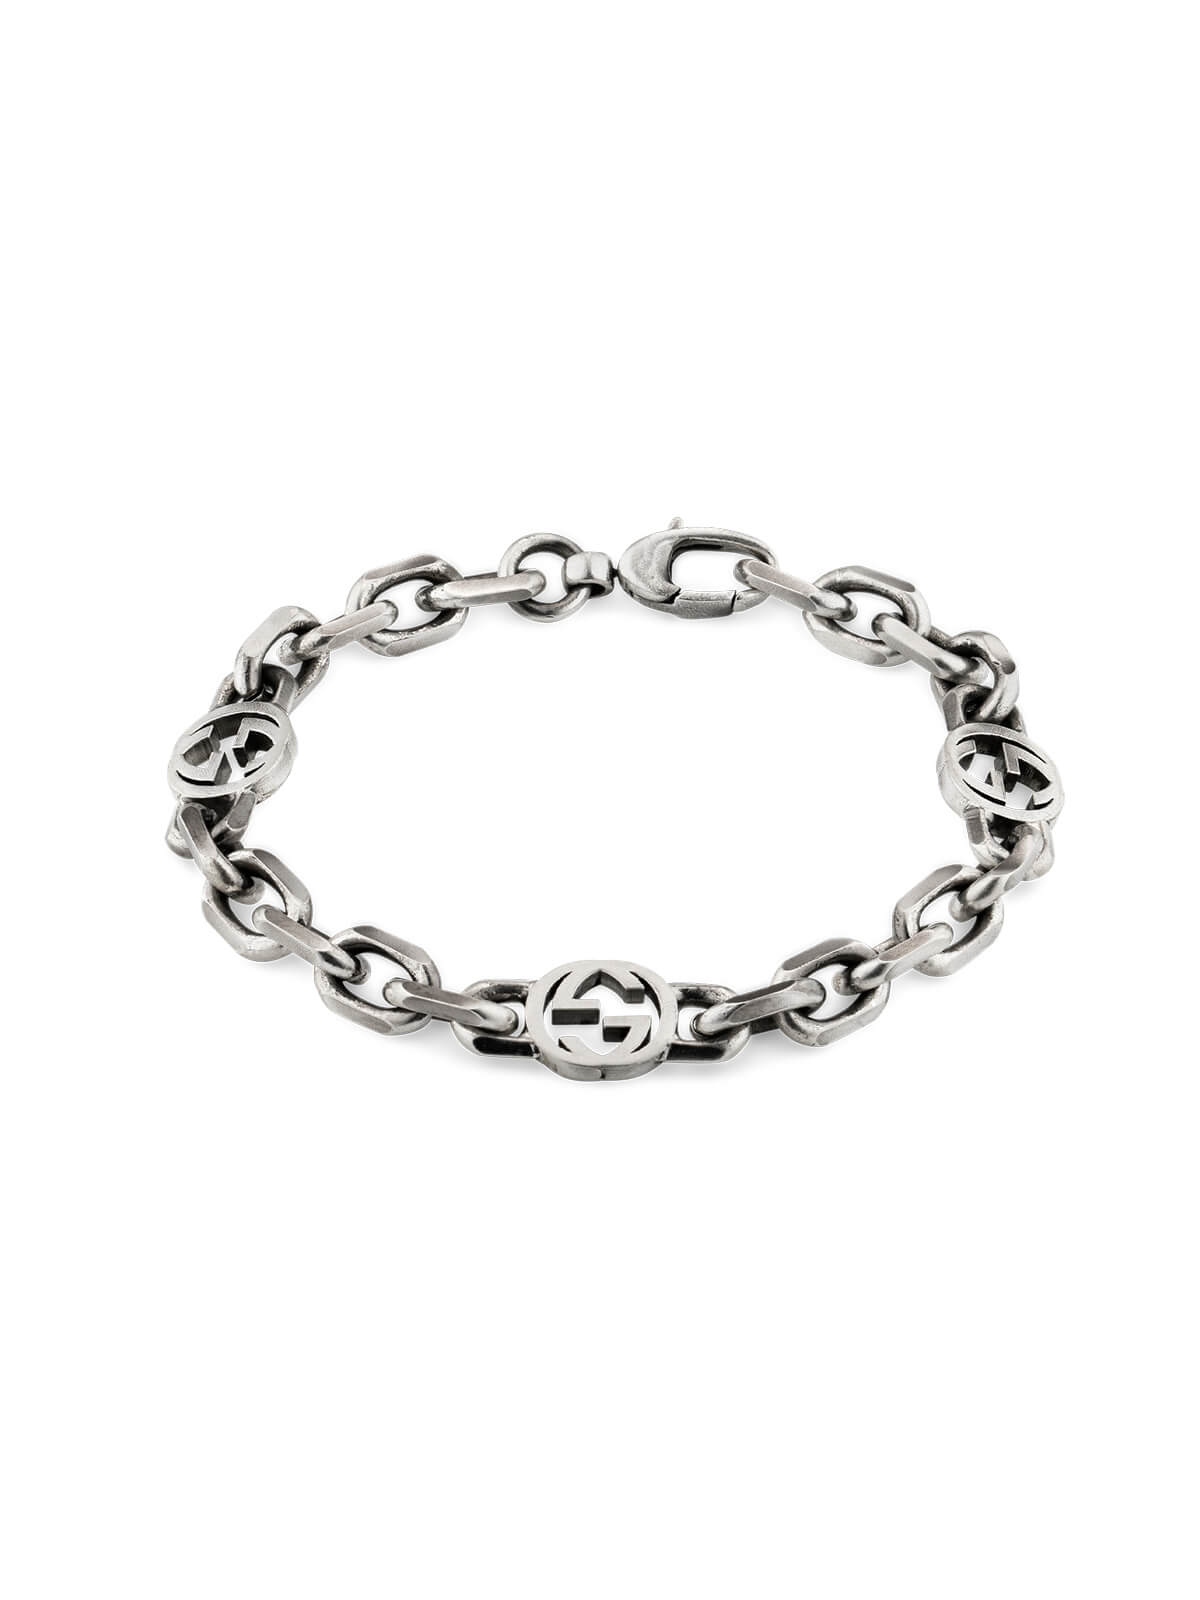 Gucci Interlocking G Bracelet in Silver 17cm YBA620798001017